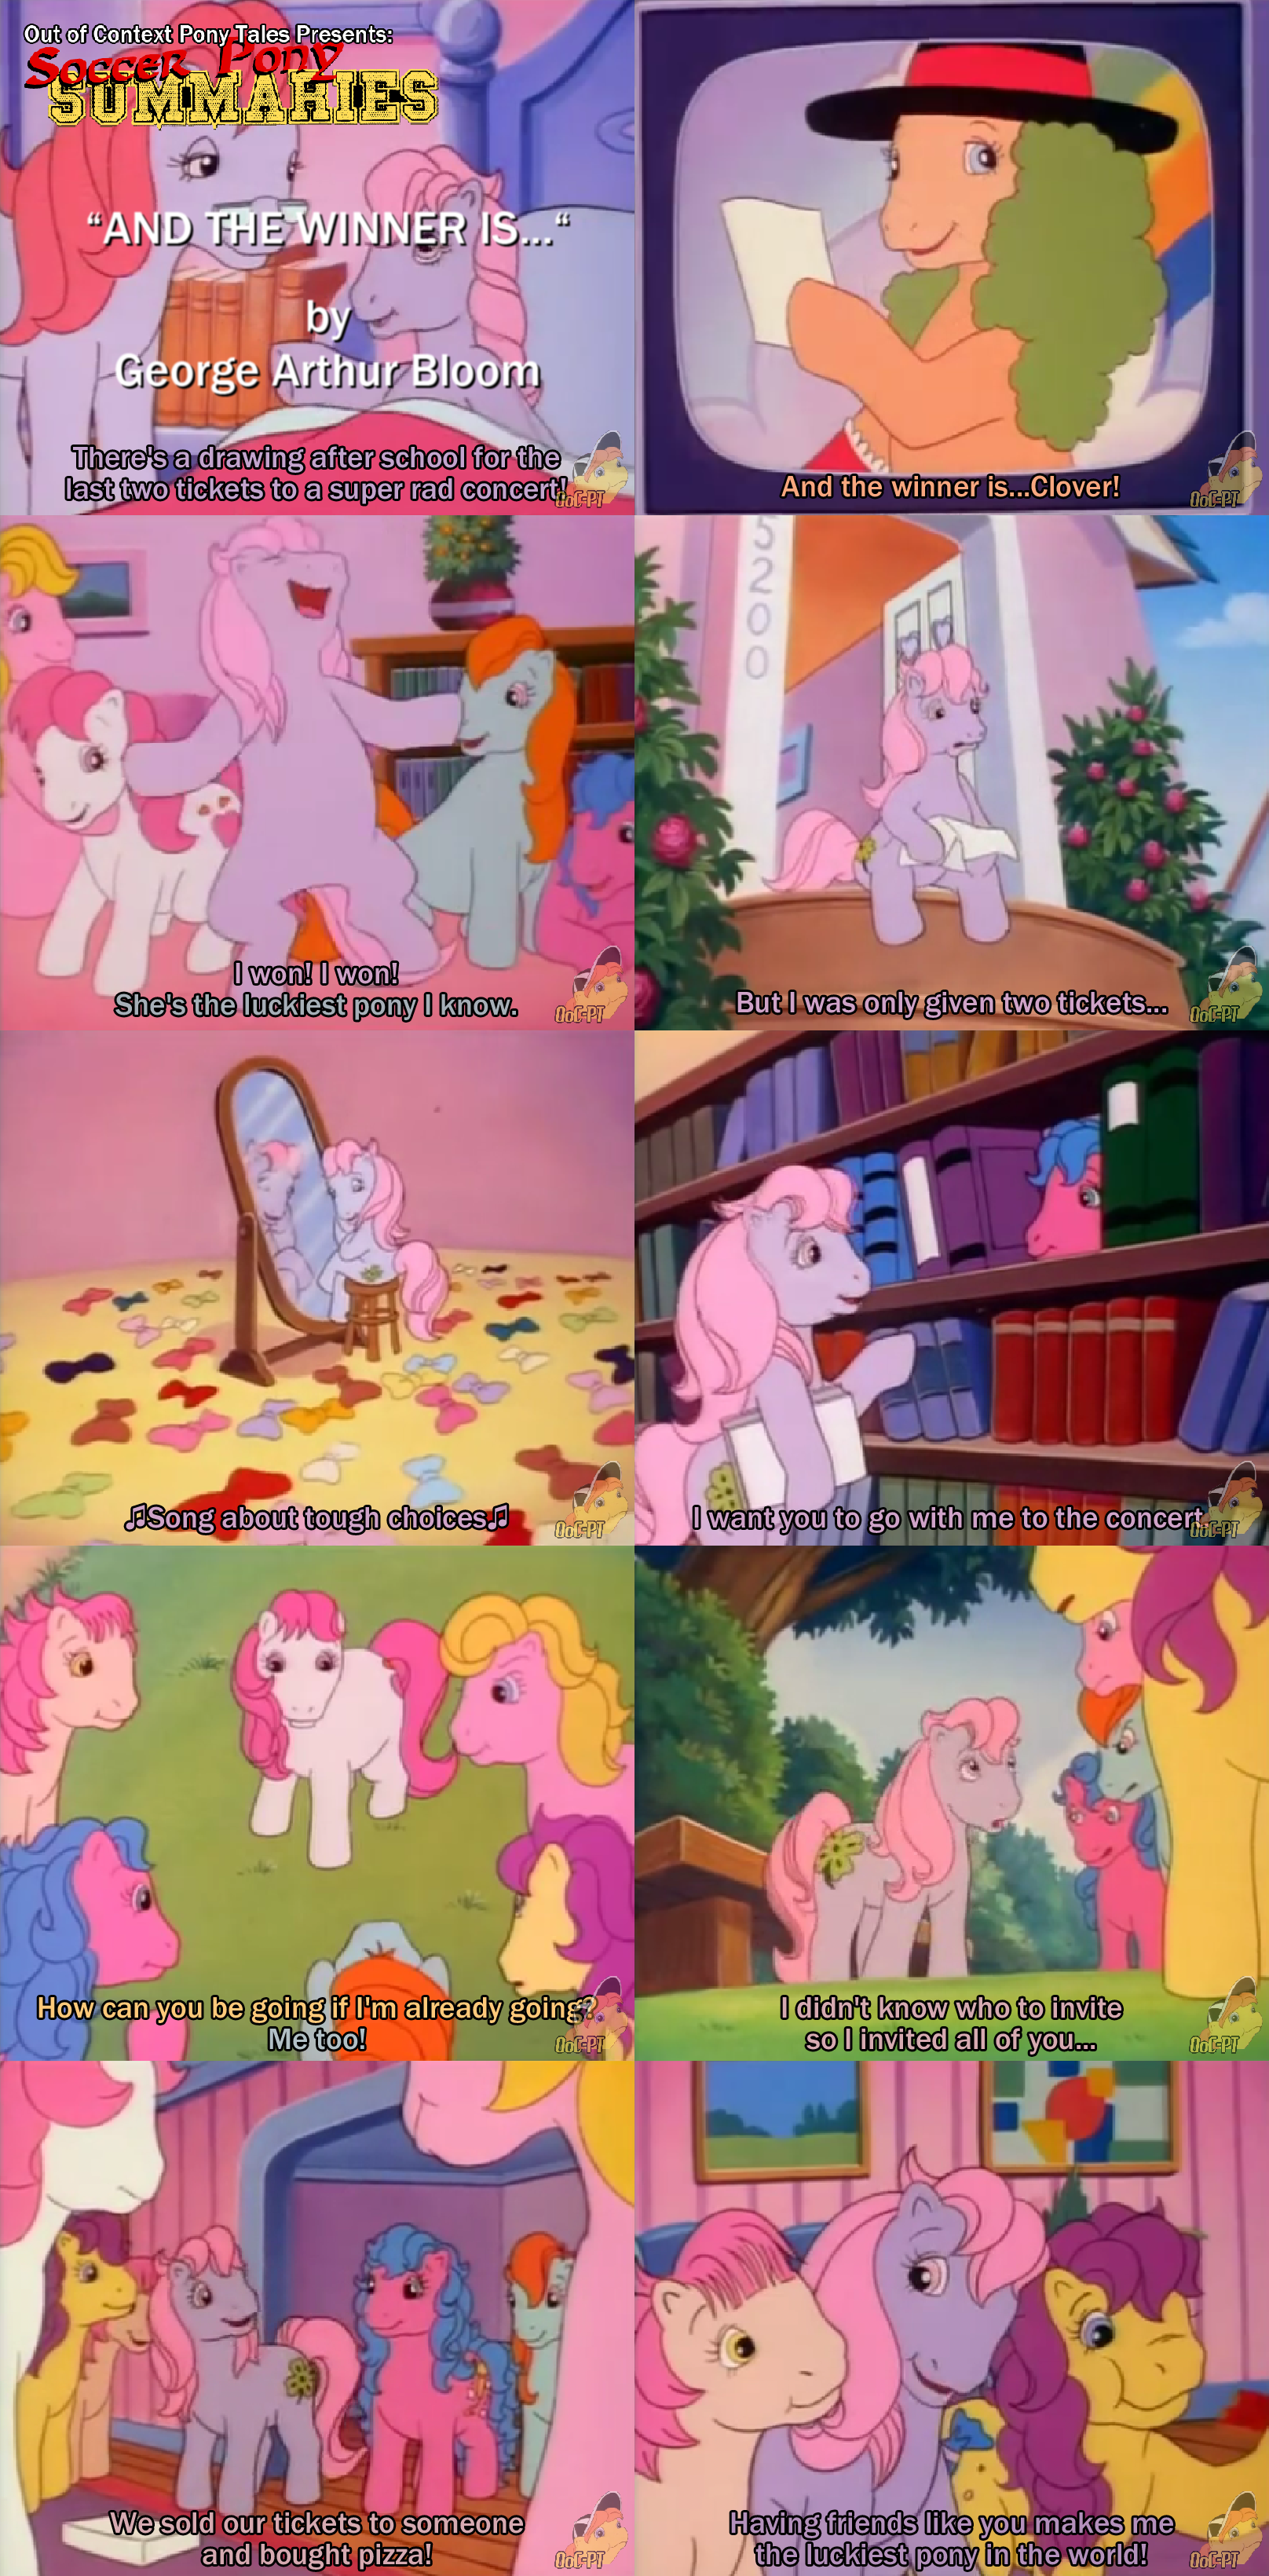 My little pony tales. My little Pony 1992. My little Pony Tales 1992. My little Pony Tales 1992 characters. My little Pony Tales Toys 1992.